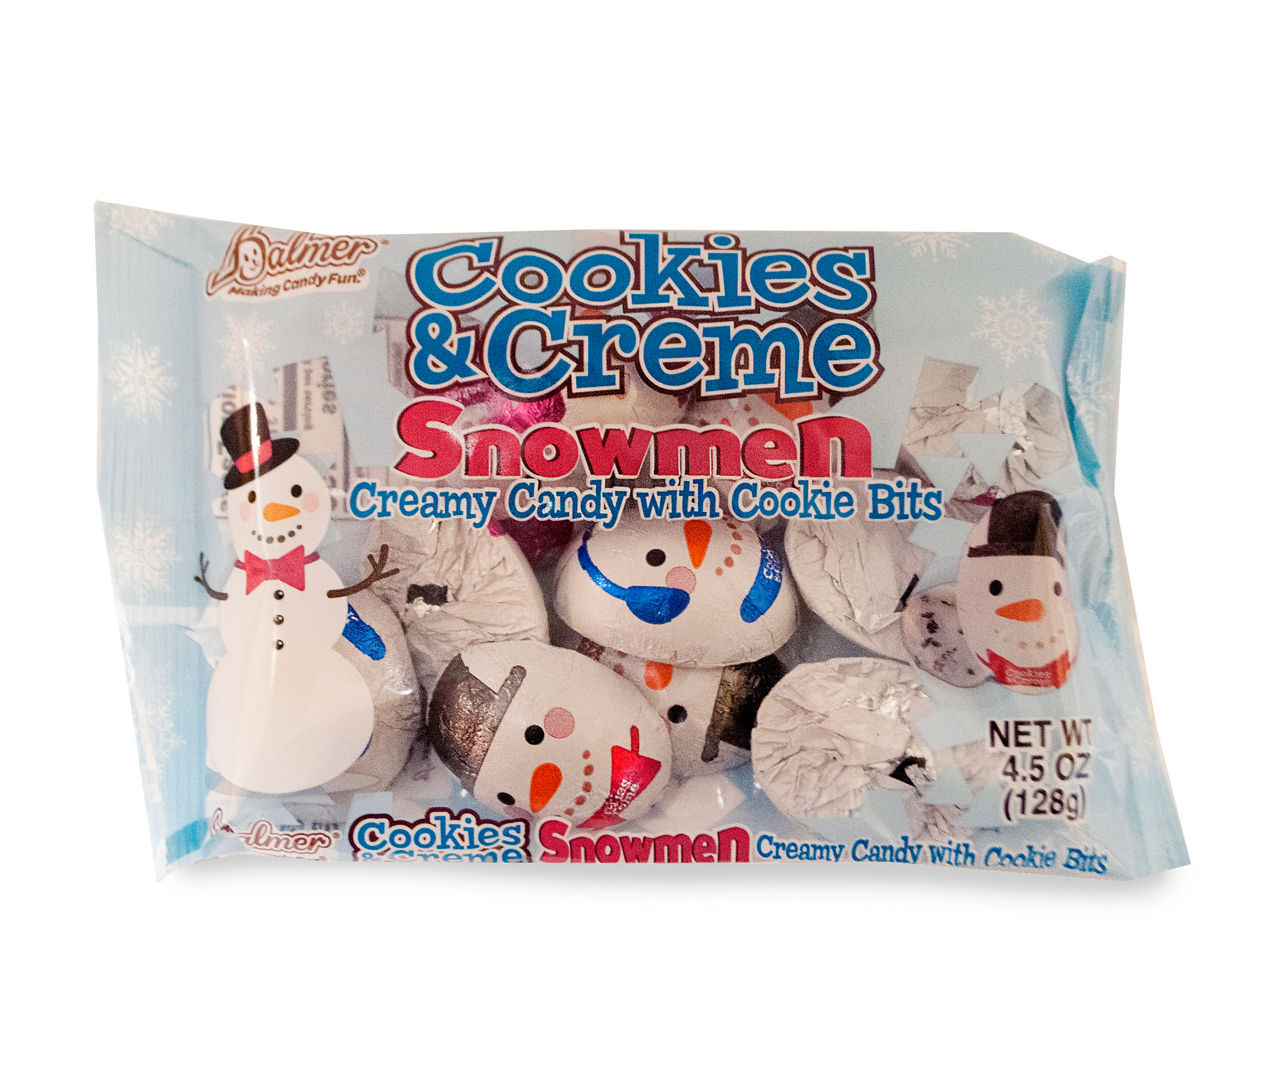 Hershey's Cookies n Creme Build A Snowman 4 oz.